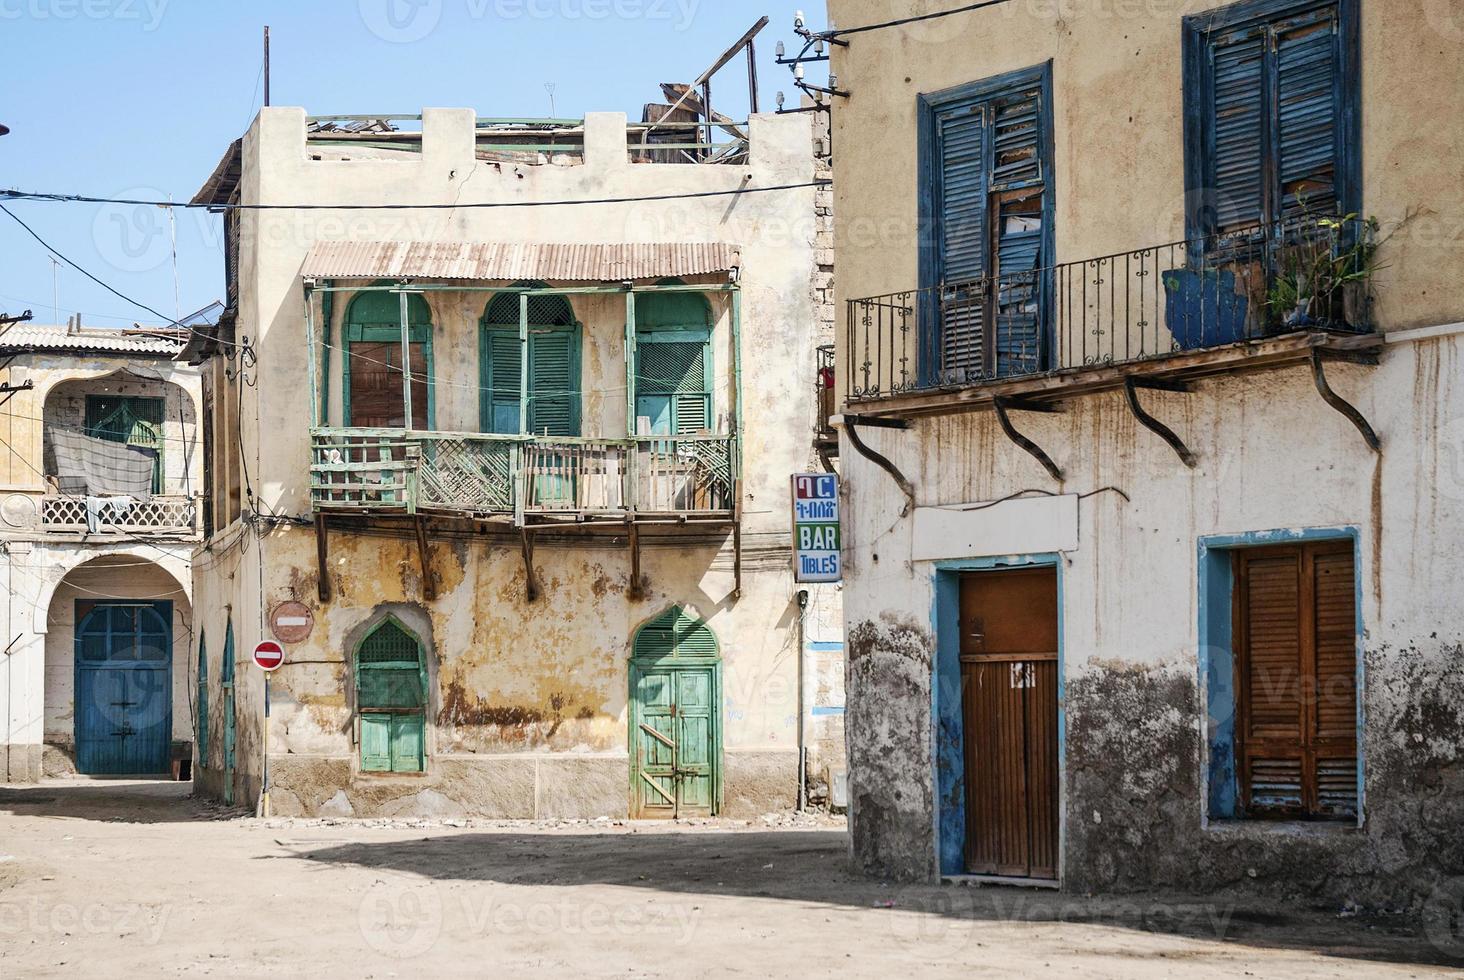 lokal arkitektur gata i röda havet stil i centrala Massawa gamla stan eritrea foto